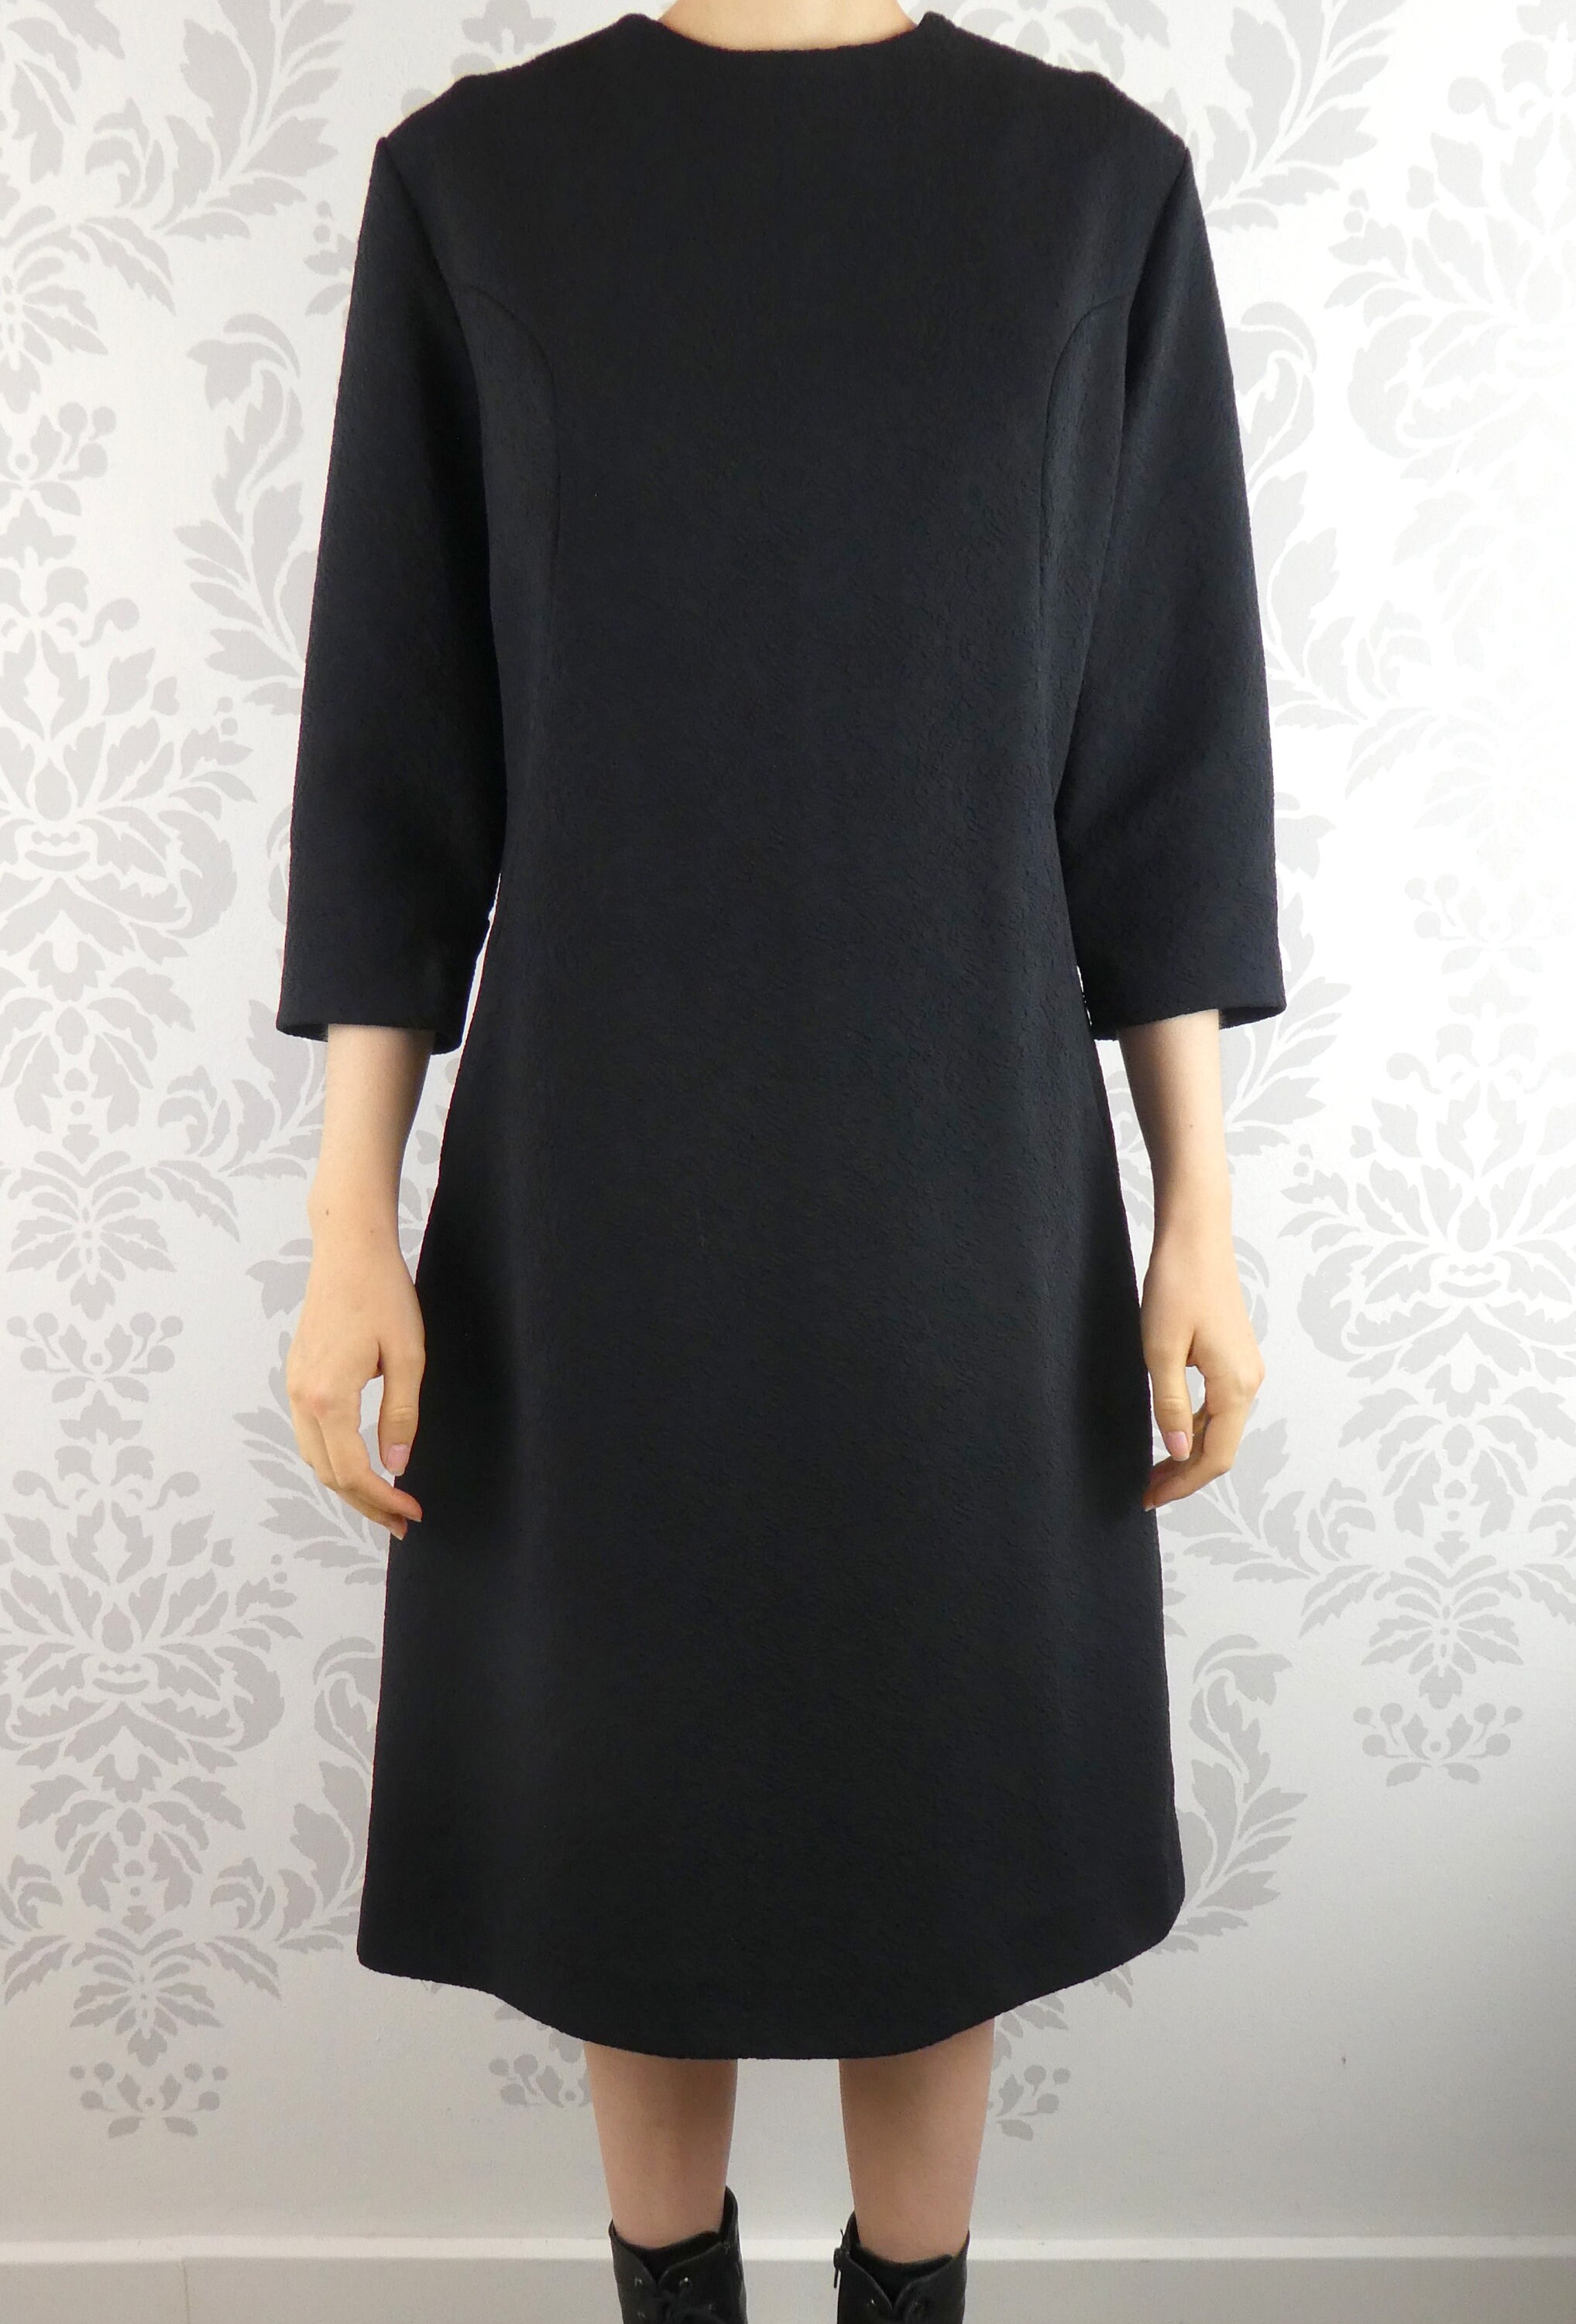 VINTAGE BLACK DRESS 1960s Princess Seams Feruchio Size Medium | Etsy